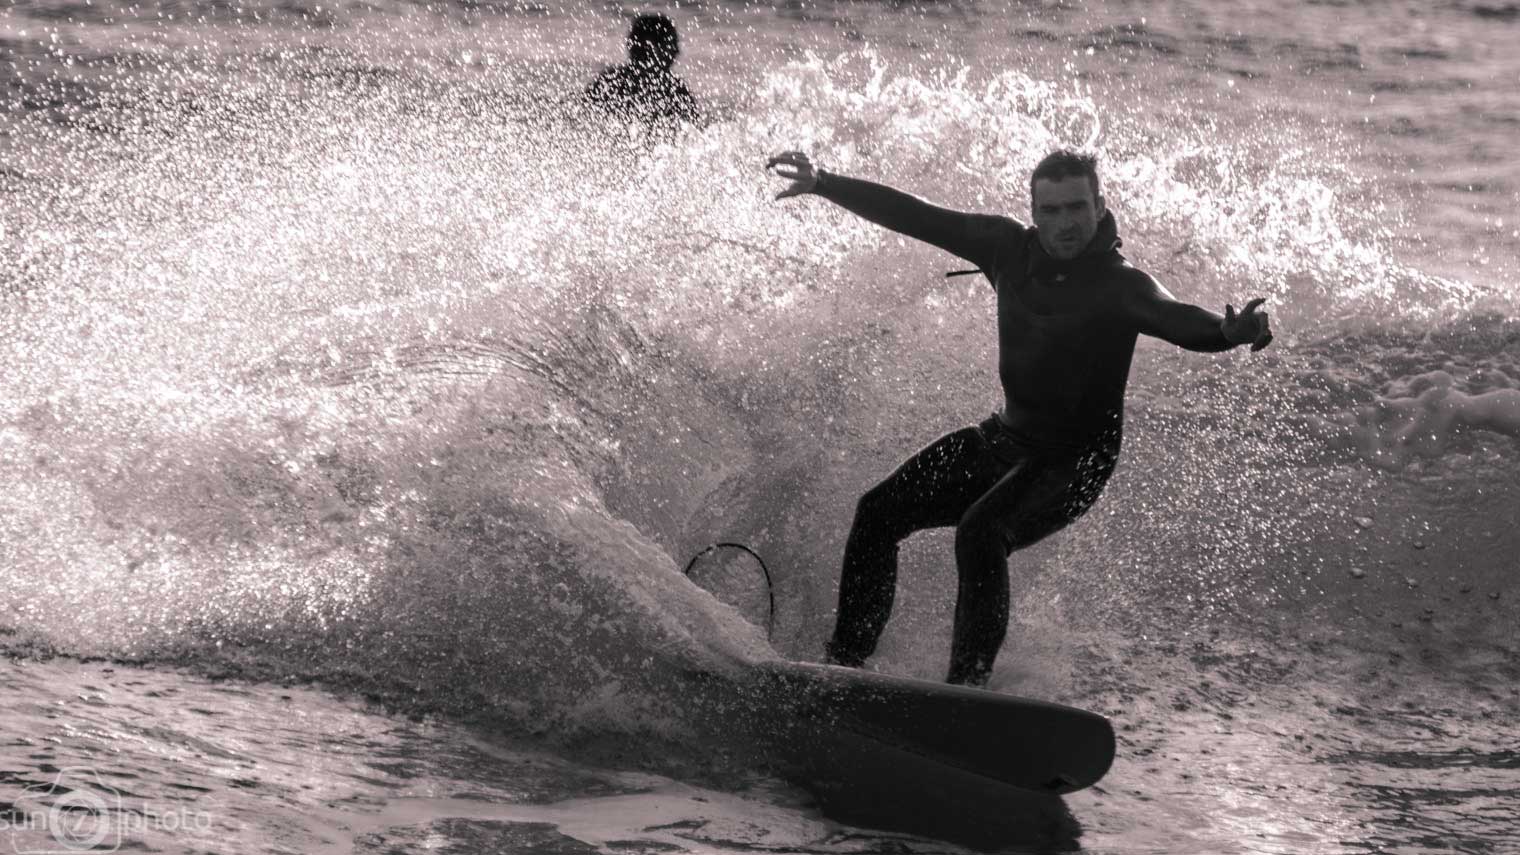 Winter Surf bnw N°2 - Arène Cros - La Ciotat - France